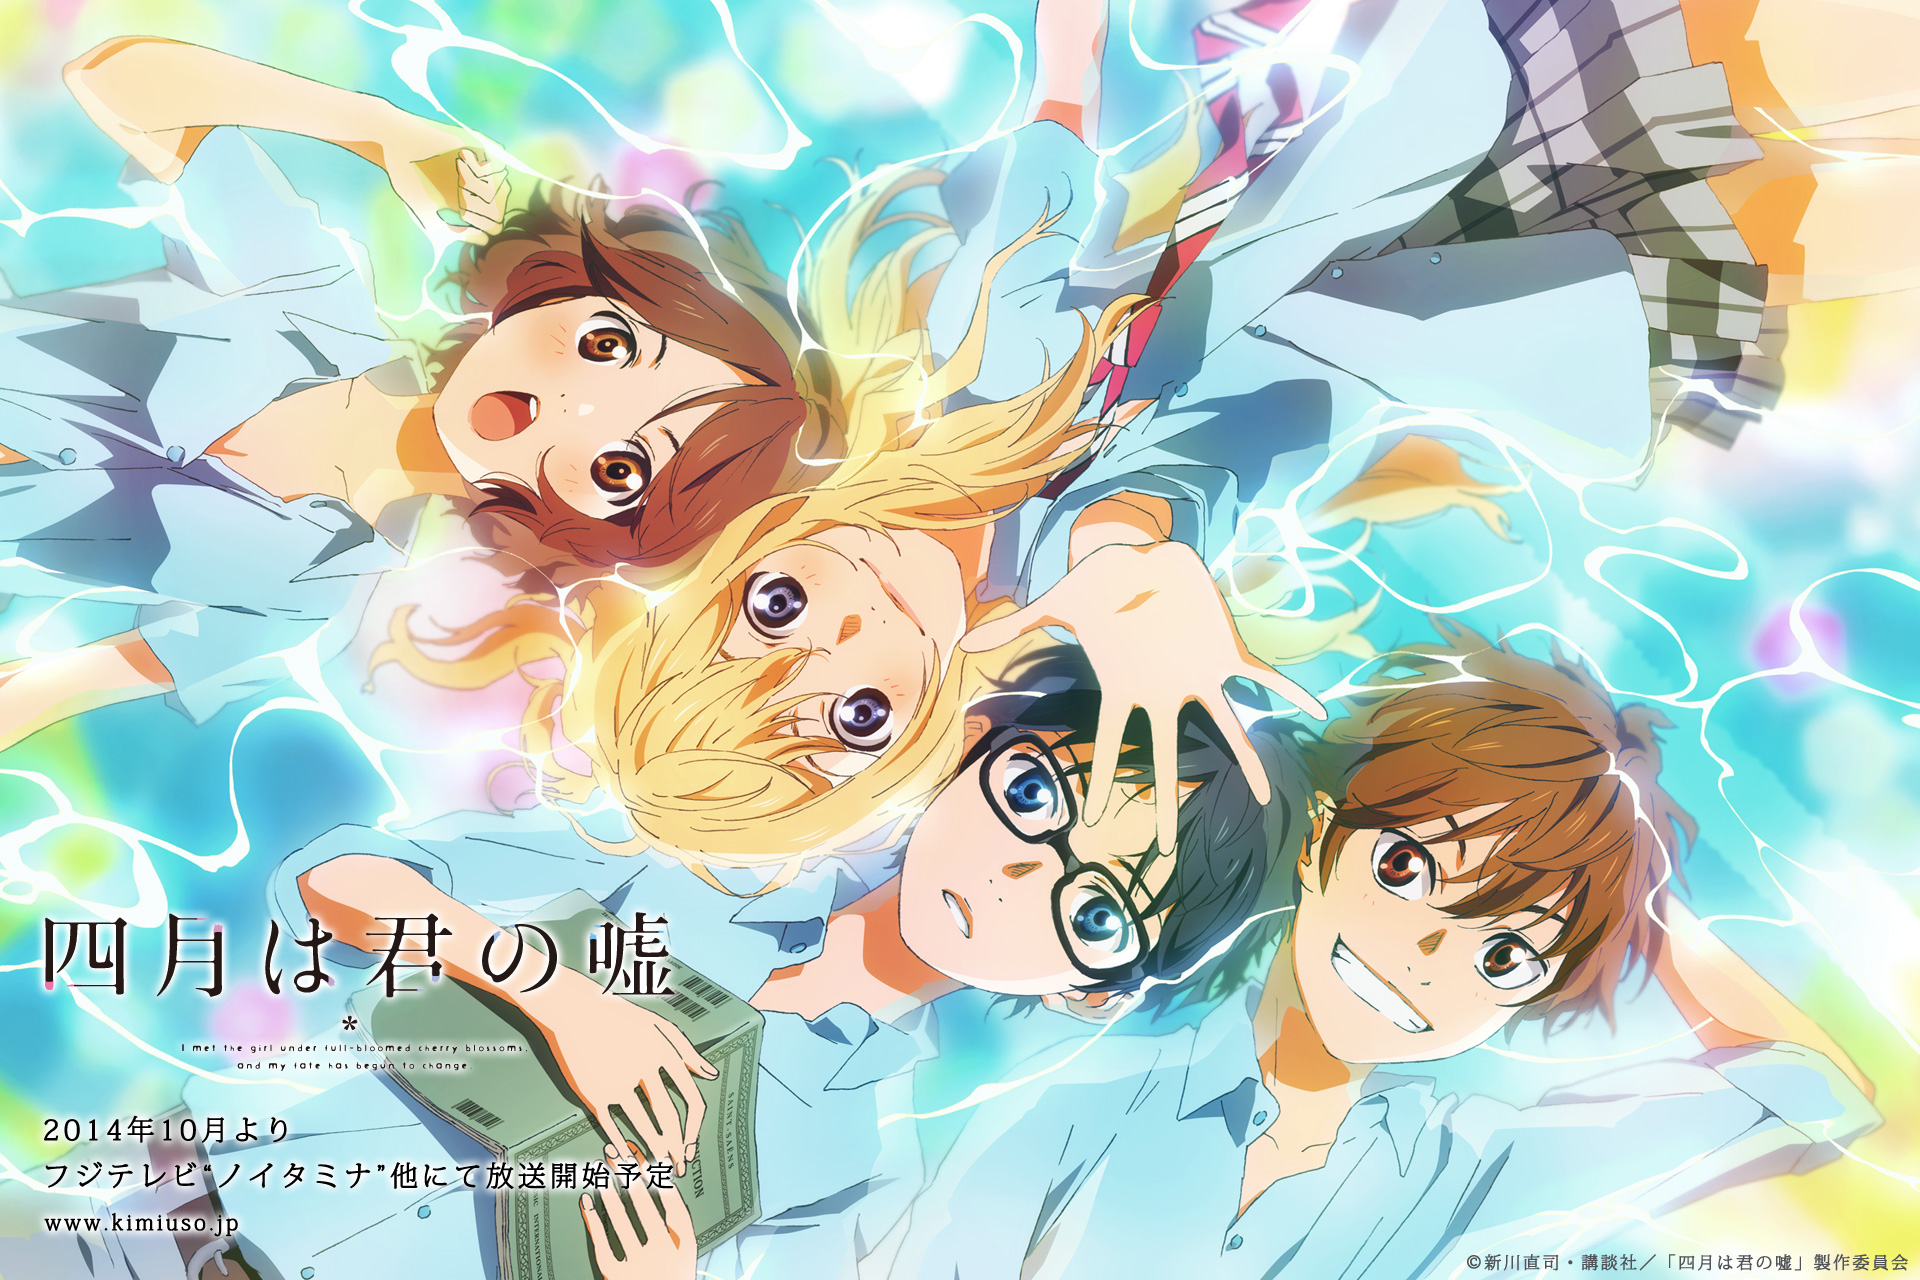 Shigatsu wa kimi no uso  Your lie in april, Anime shows, Best